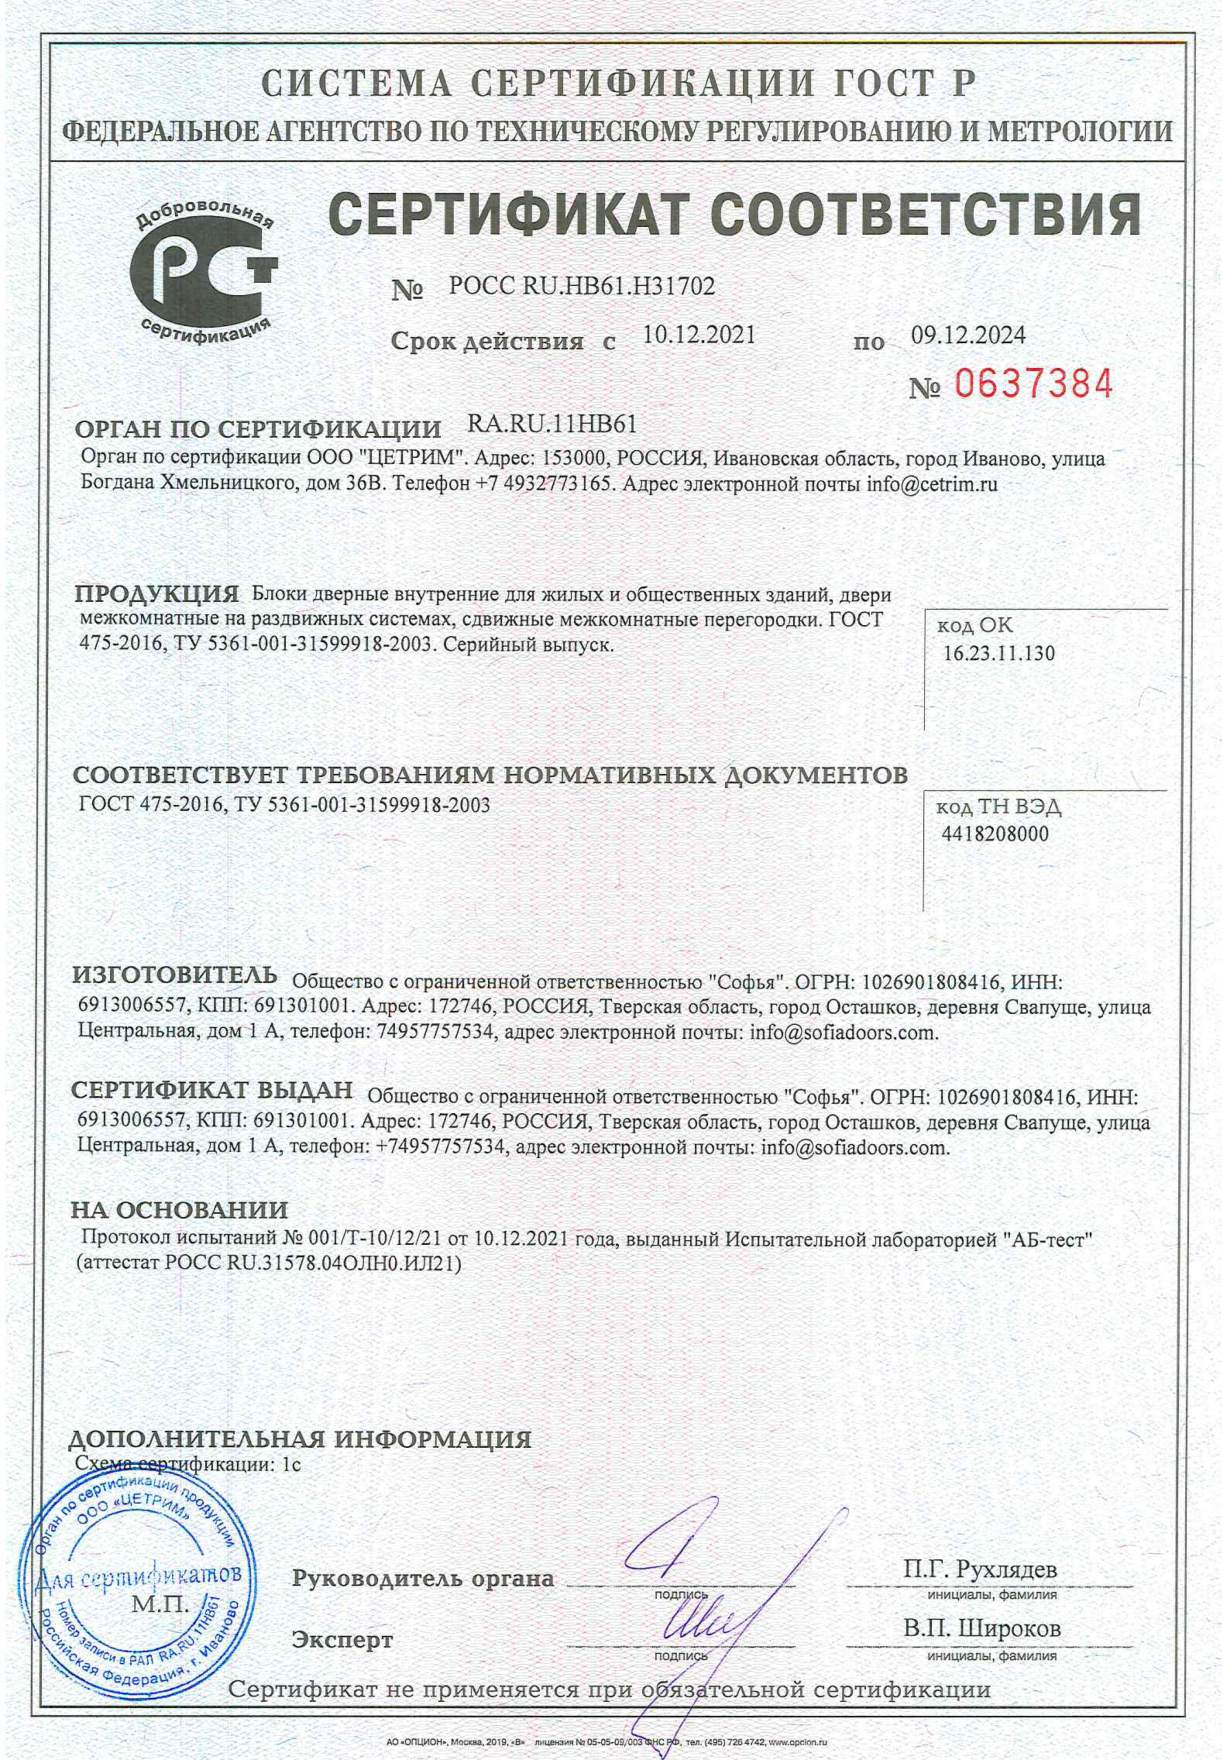 sertifikat-sootvetstviya-gost-475-2016-large